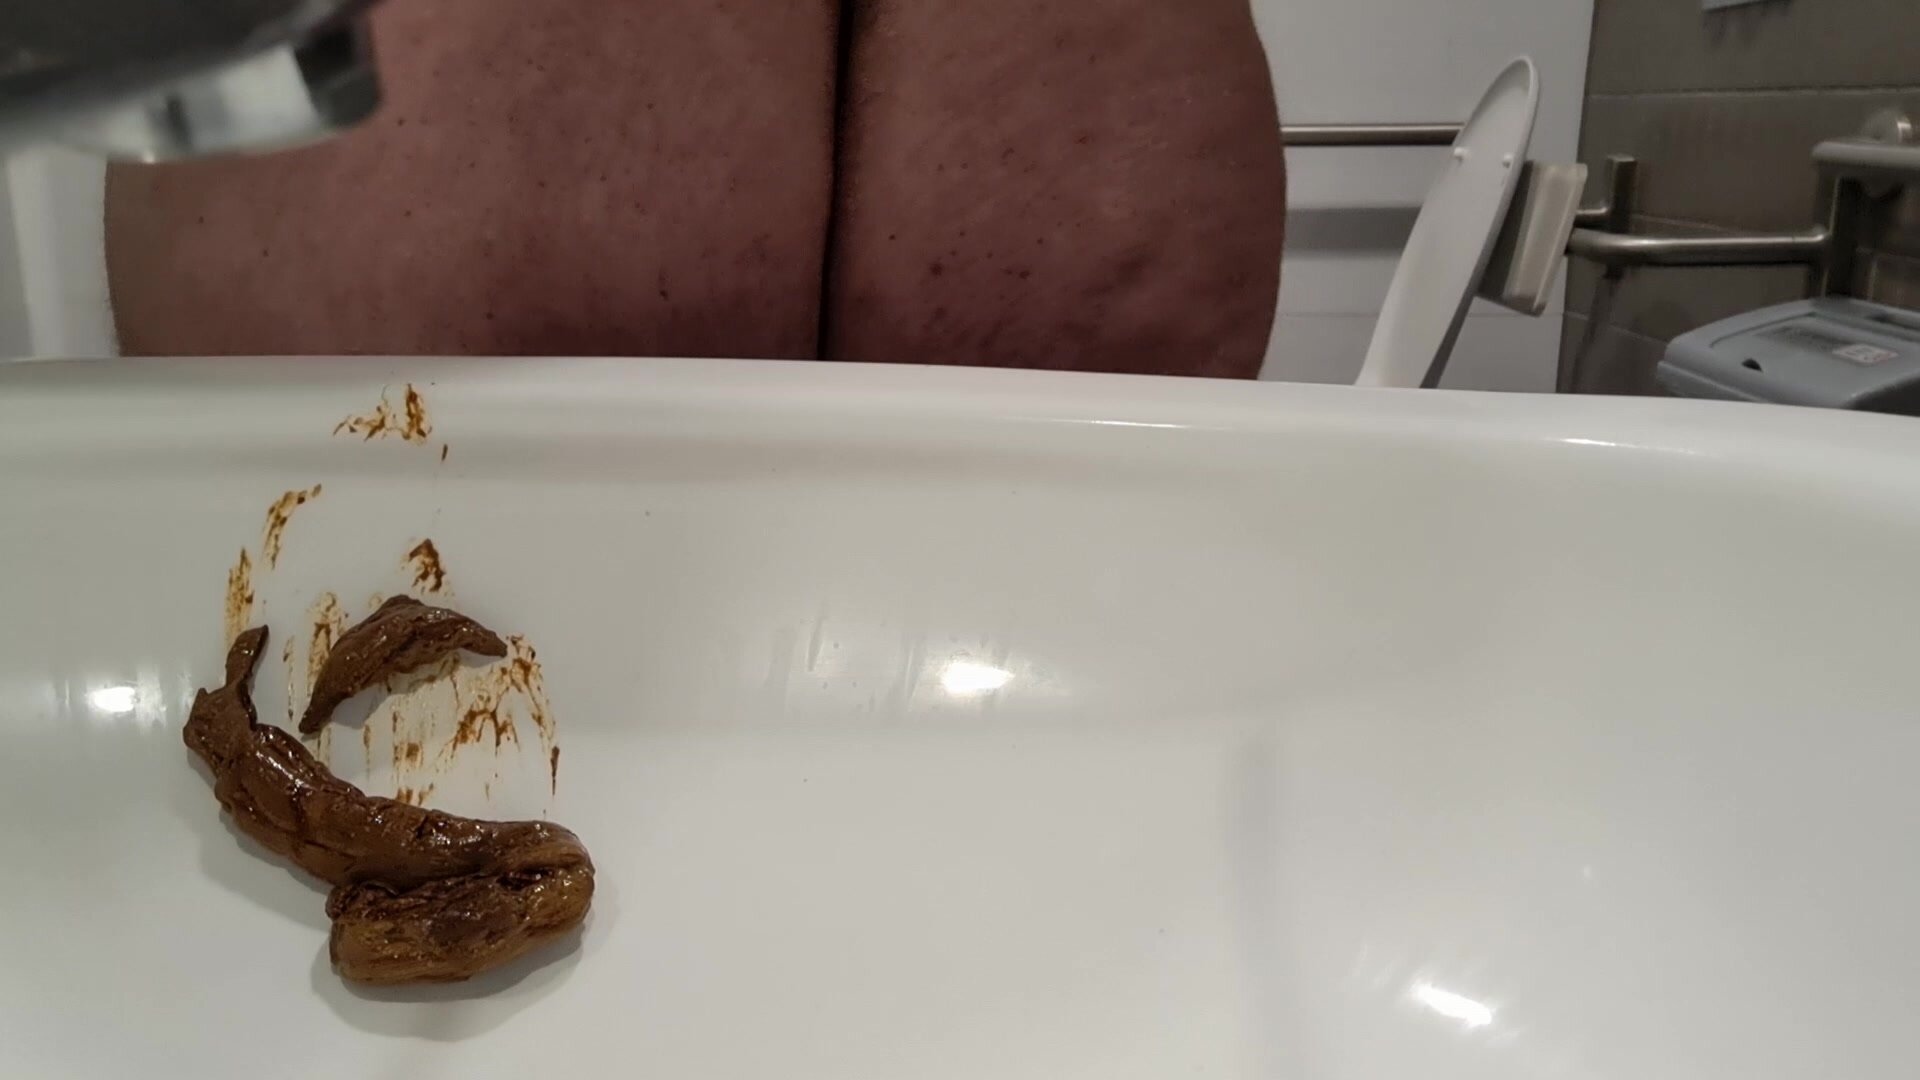 Shitting in public toilet sink (ftm)